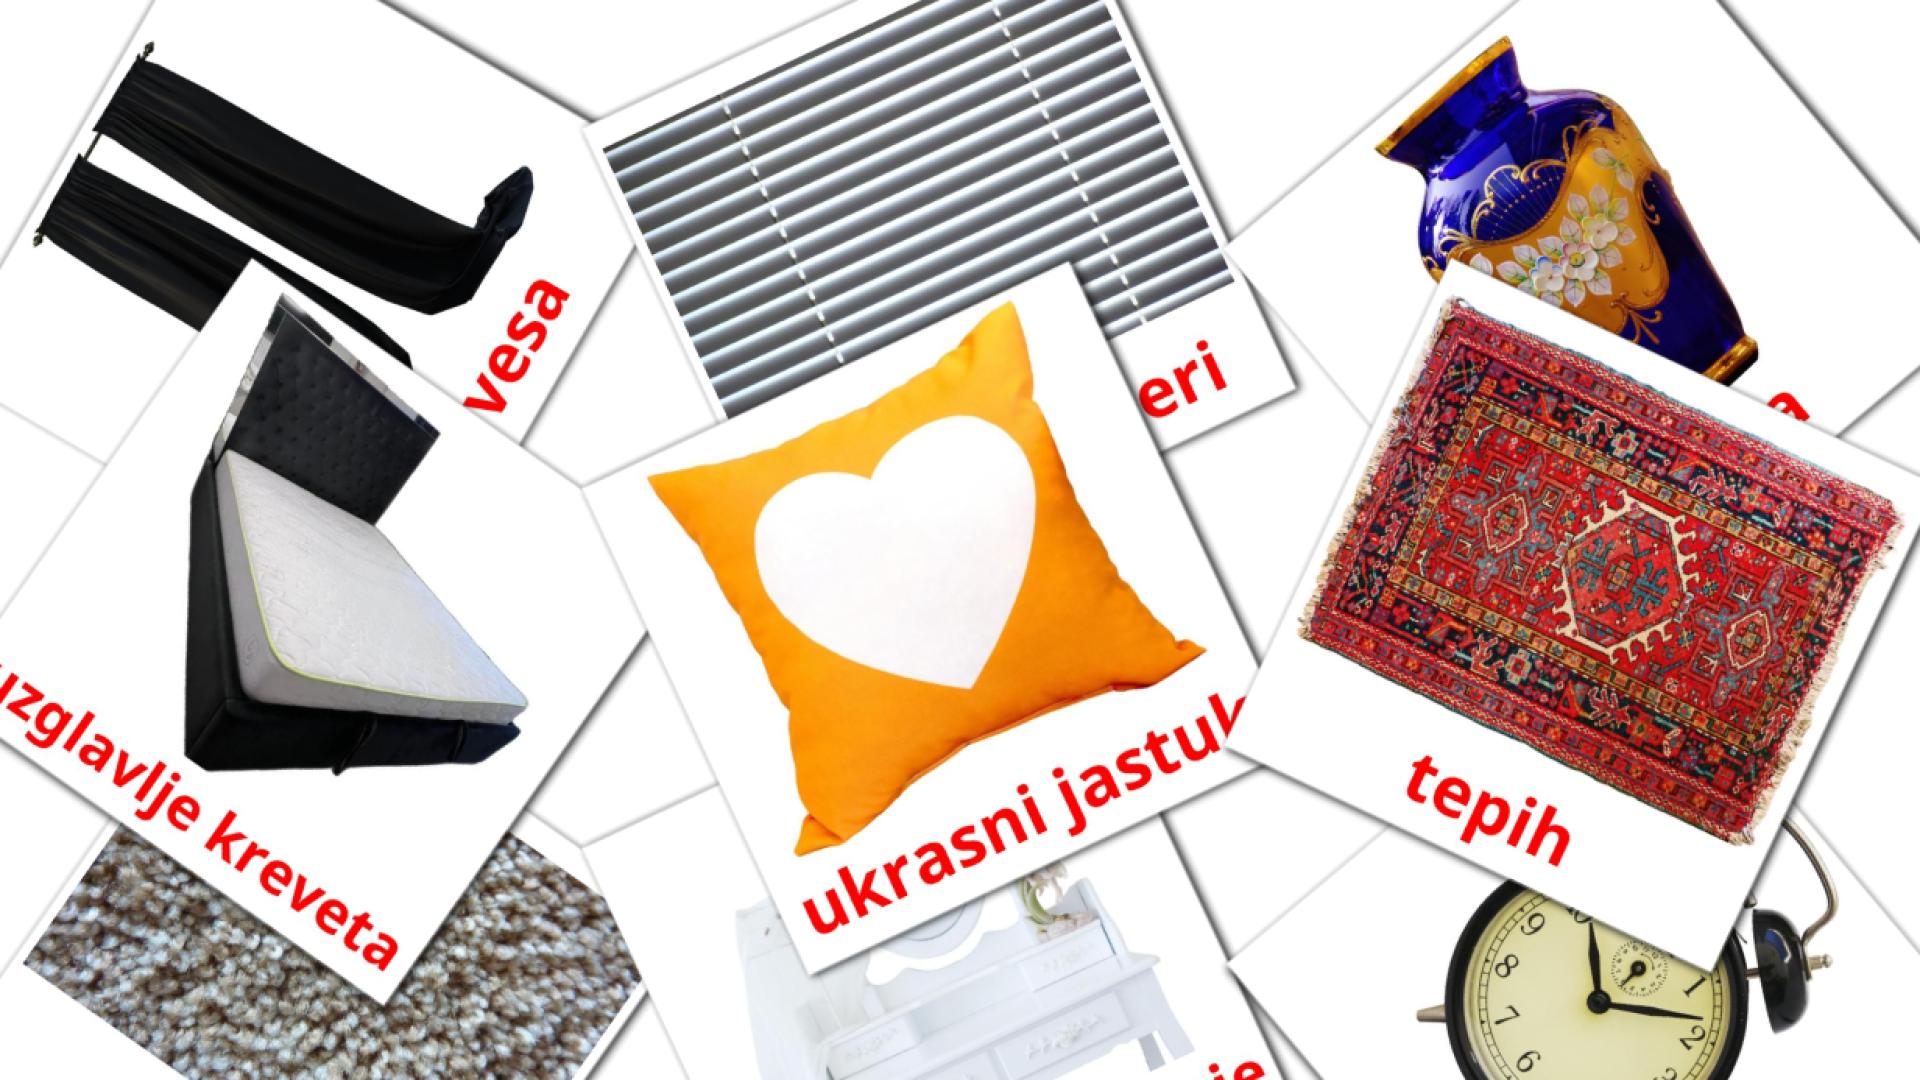 spavaća soba serbian vocabulary flashcards